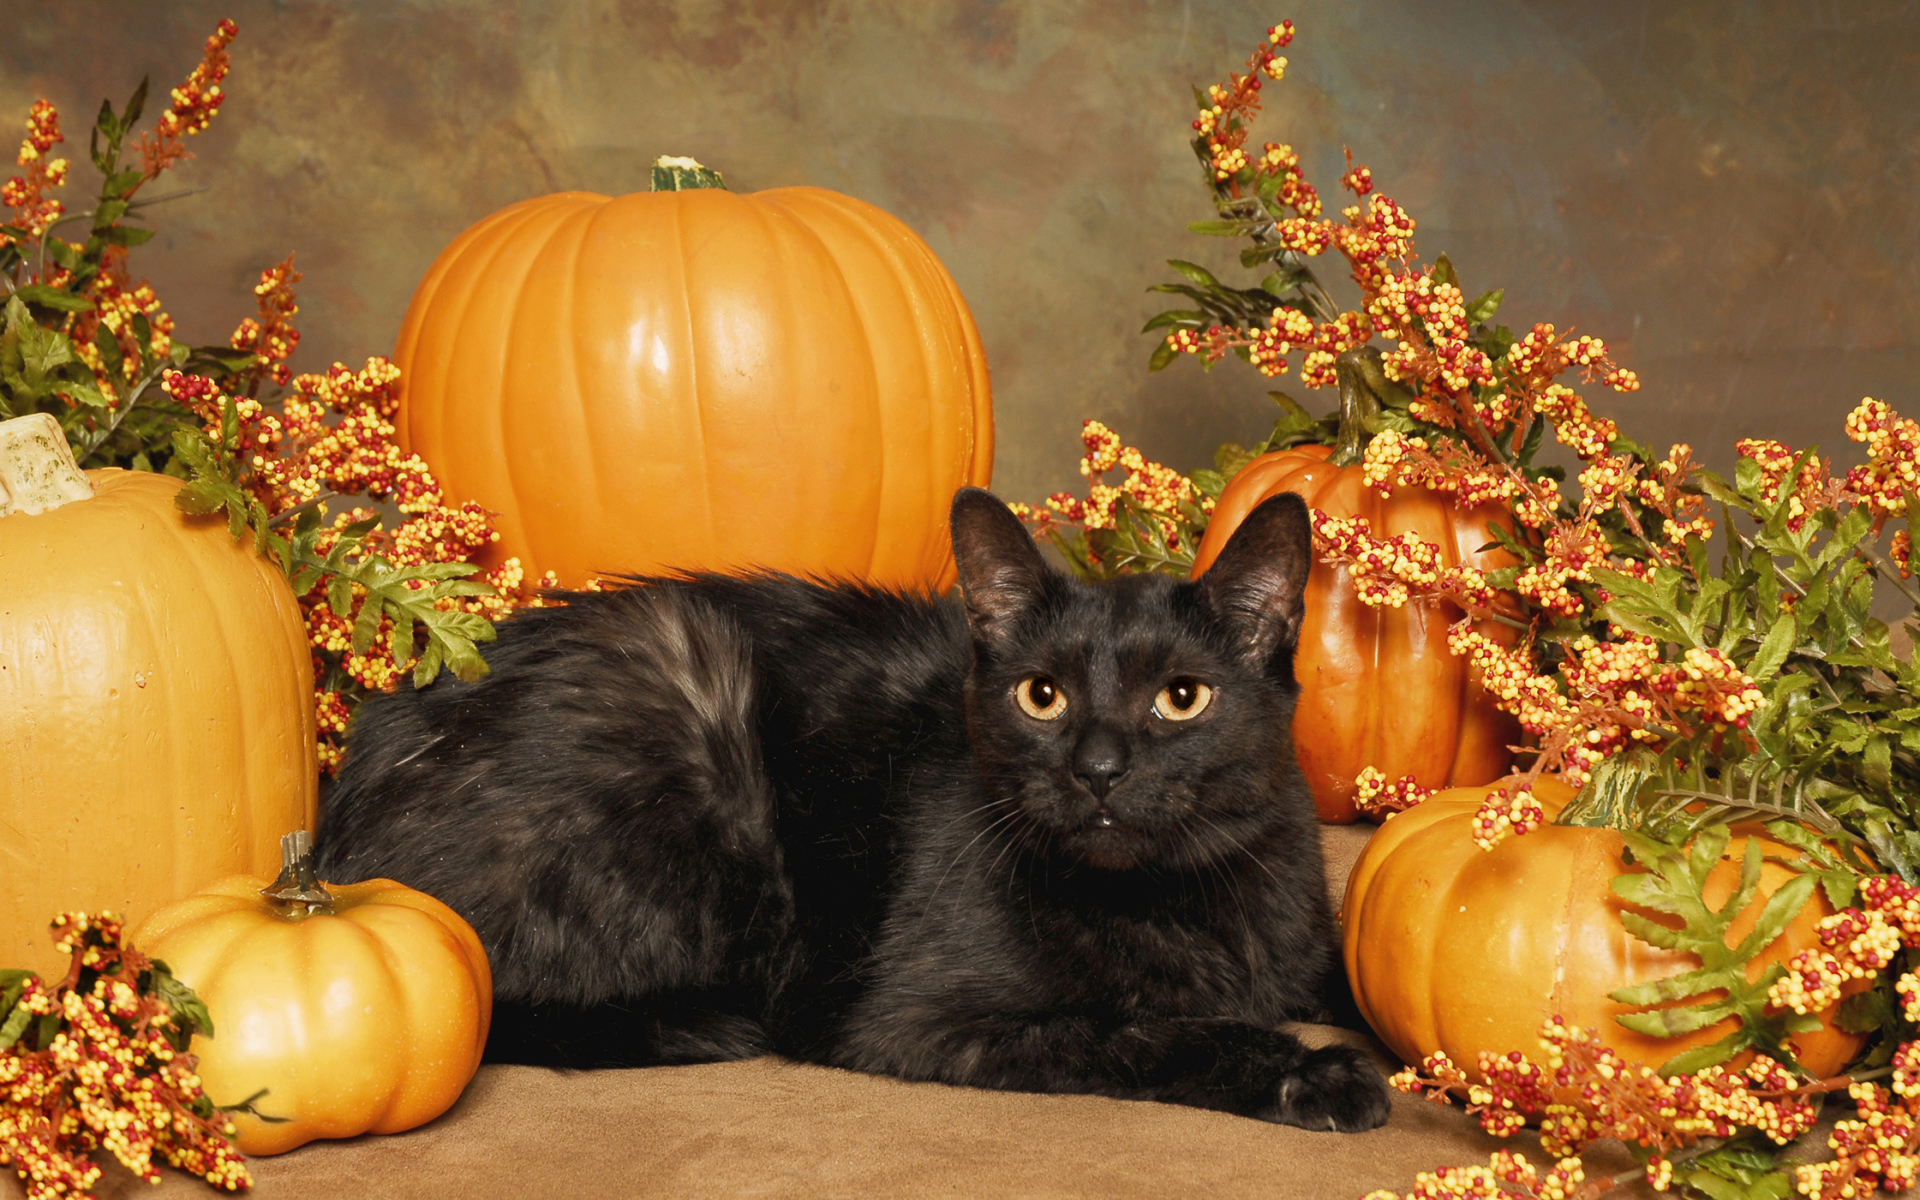 Black cat with pumpkins for Halloween